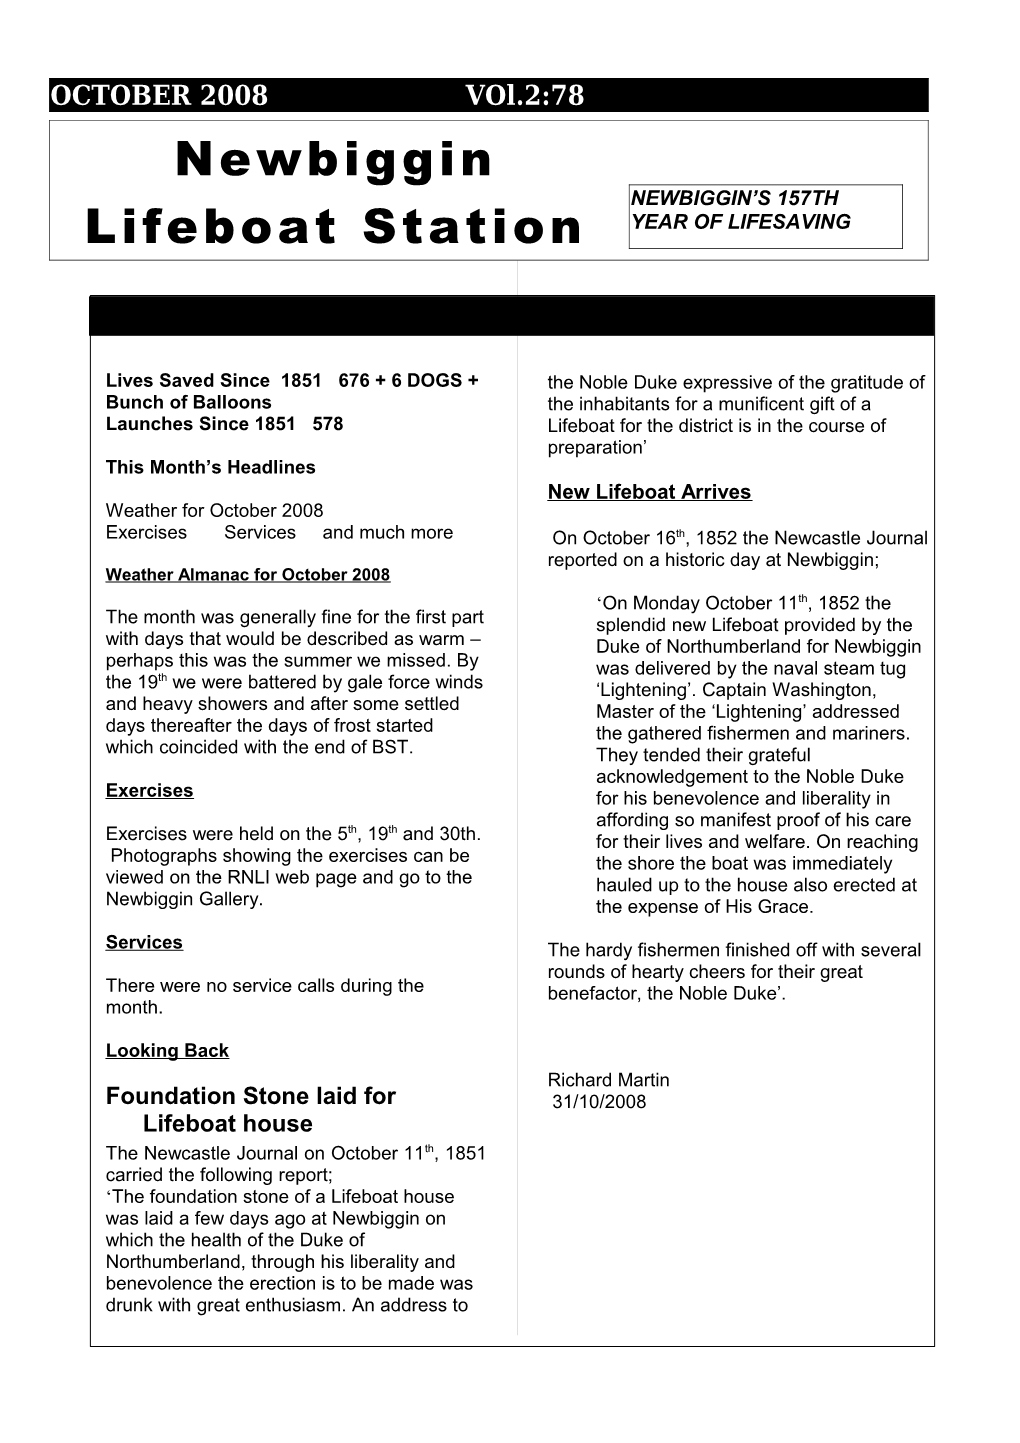 2 Newbiggin Lifeboat Station - 2 s2